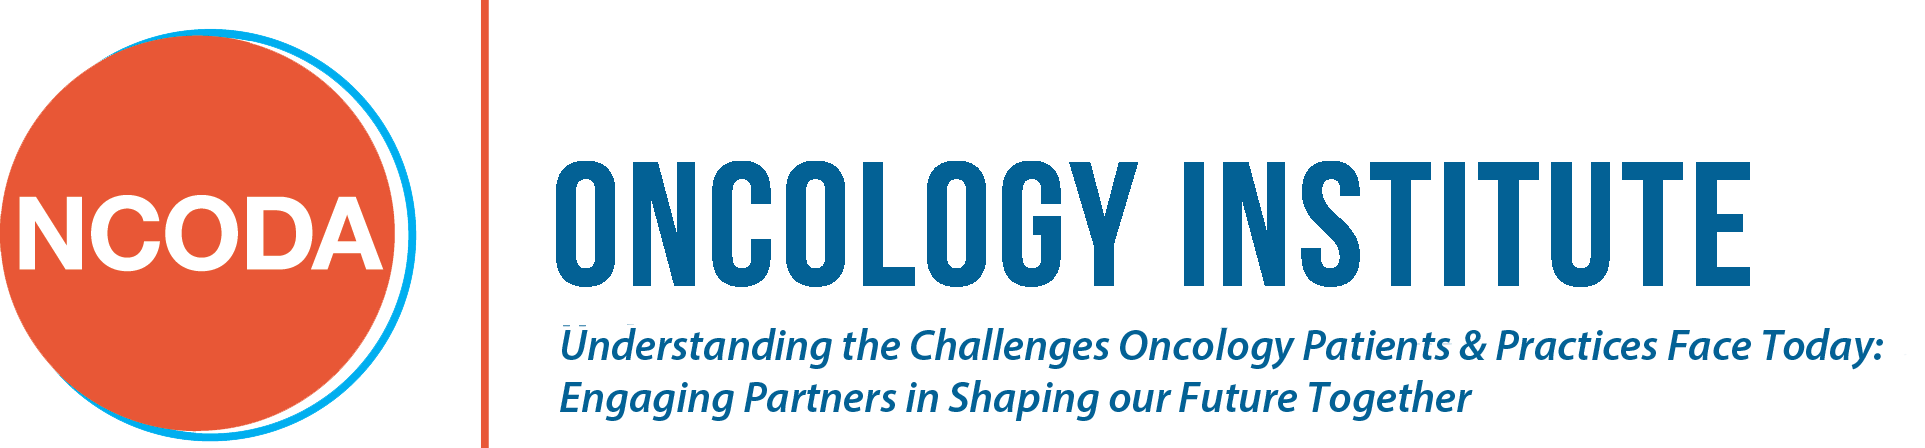 NCODA Oncology Institute logo